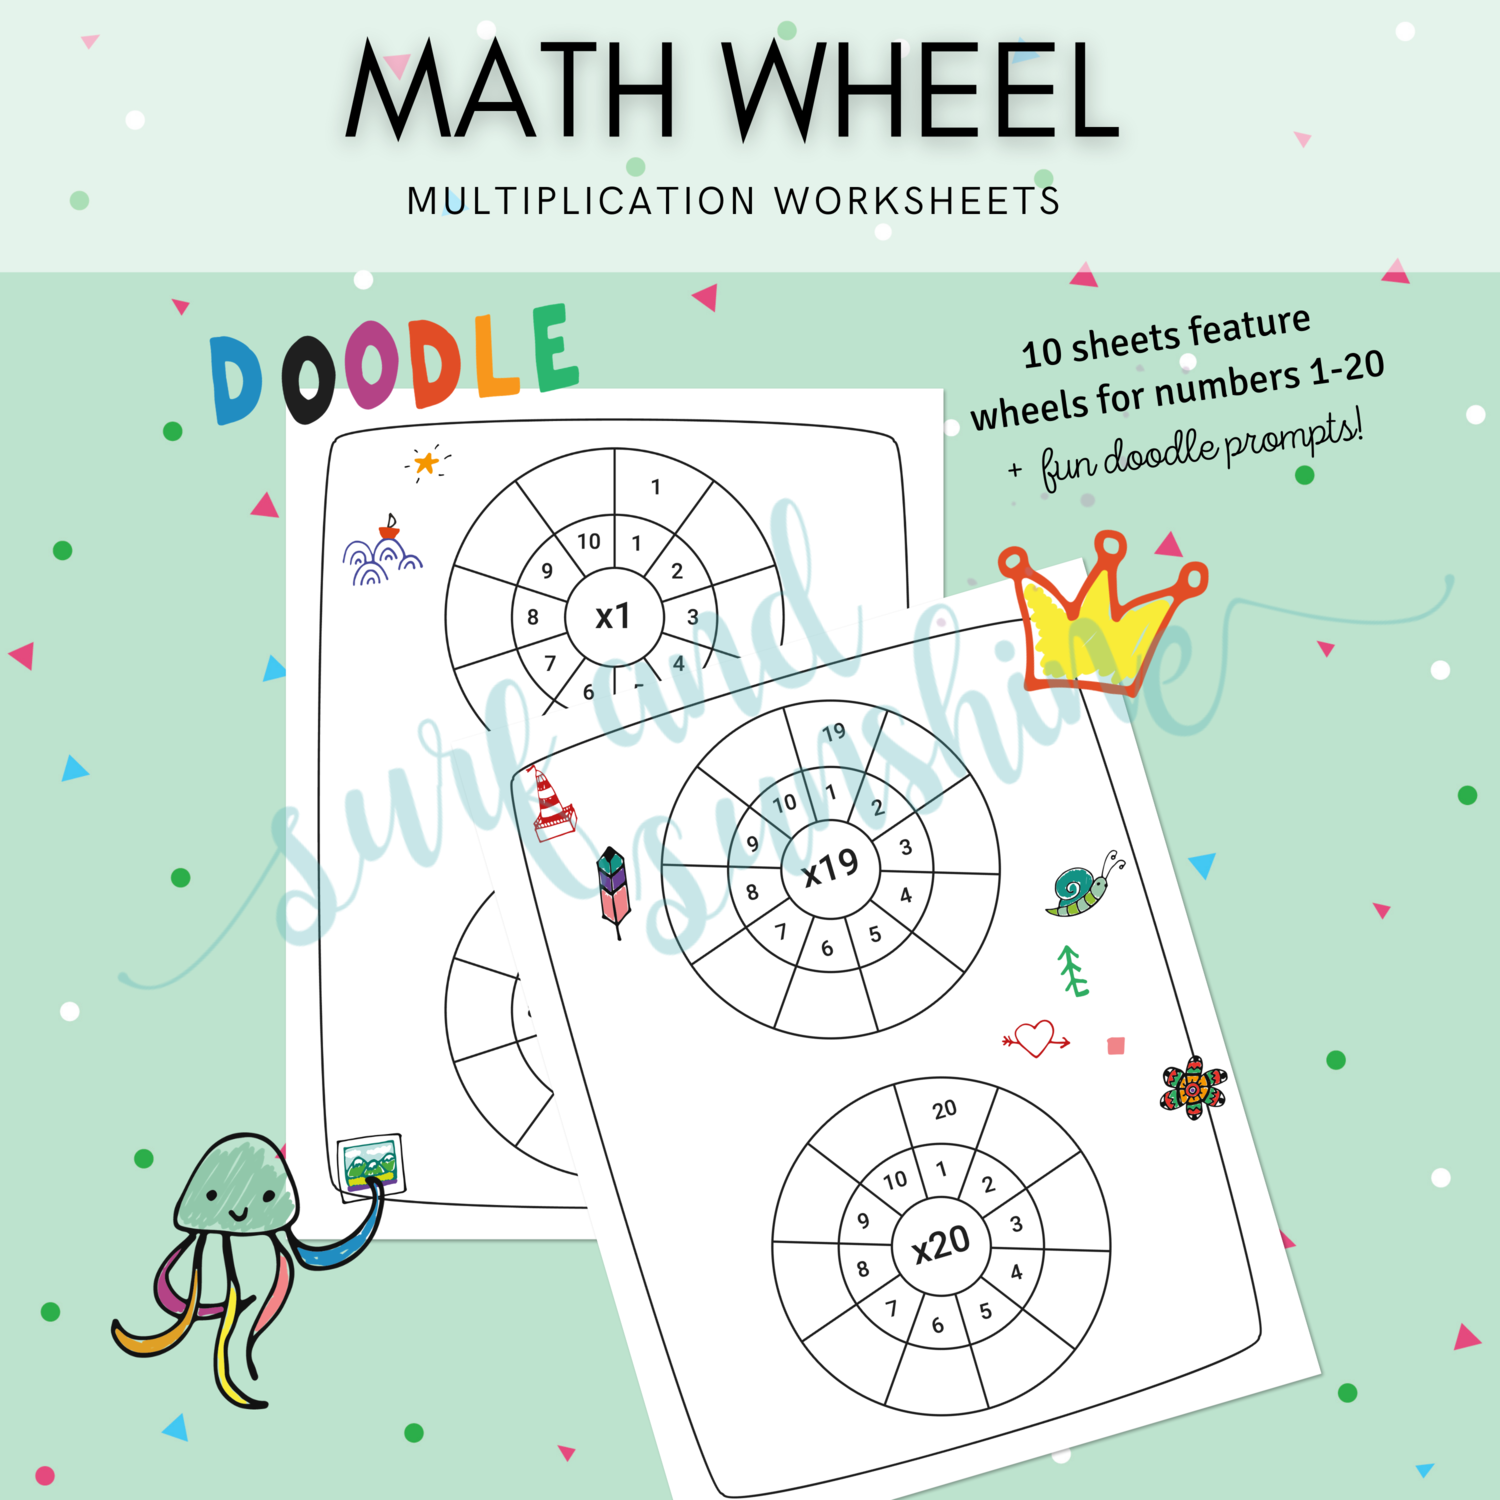 Math Wheel Multiplication Worksheets